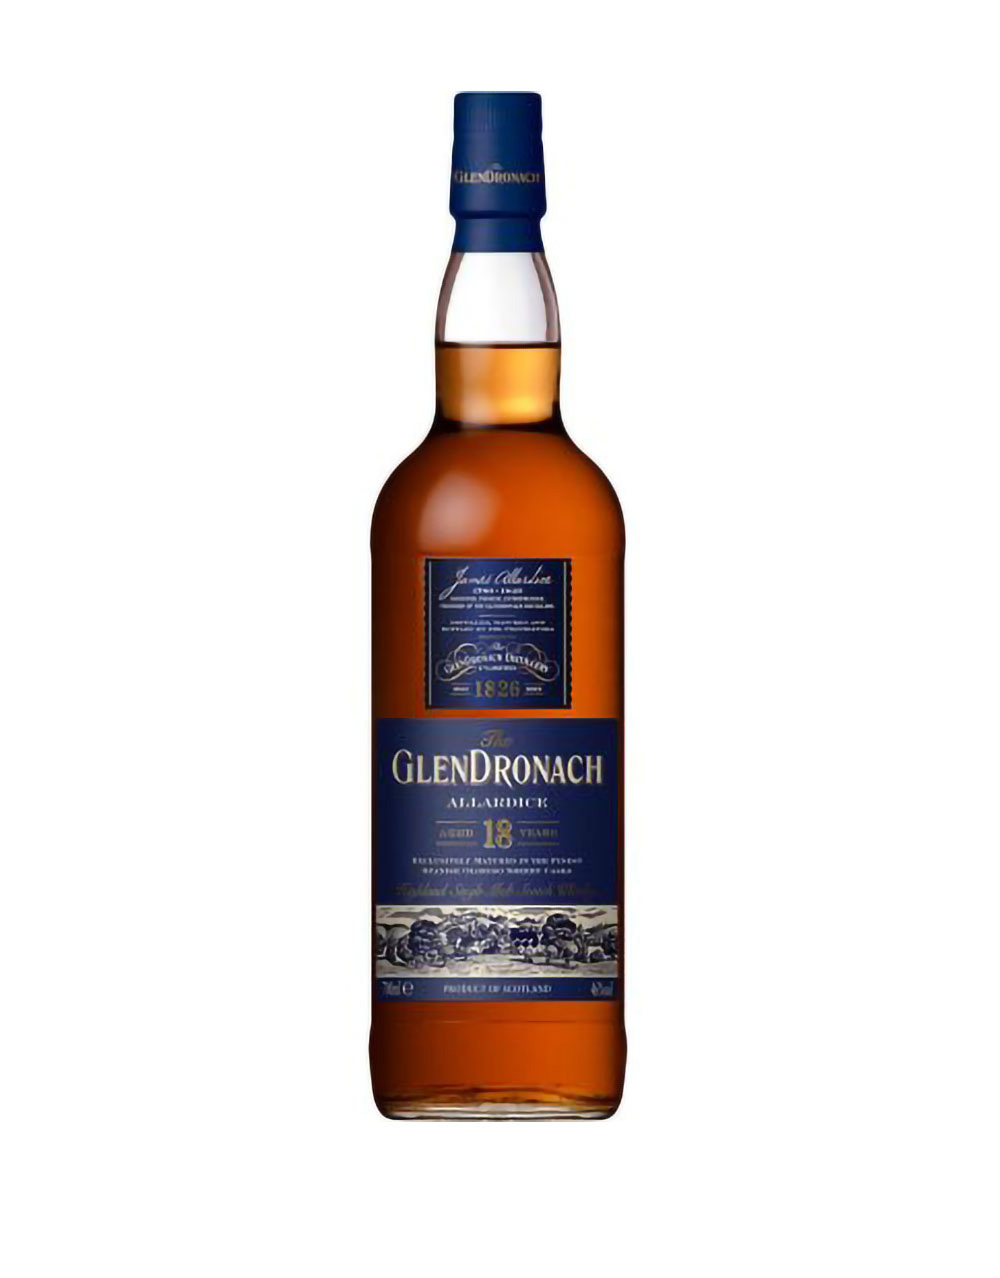 The GlenDronach 18 Year Old Original Allardice Scotch Whisky